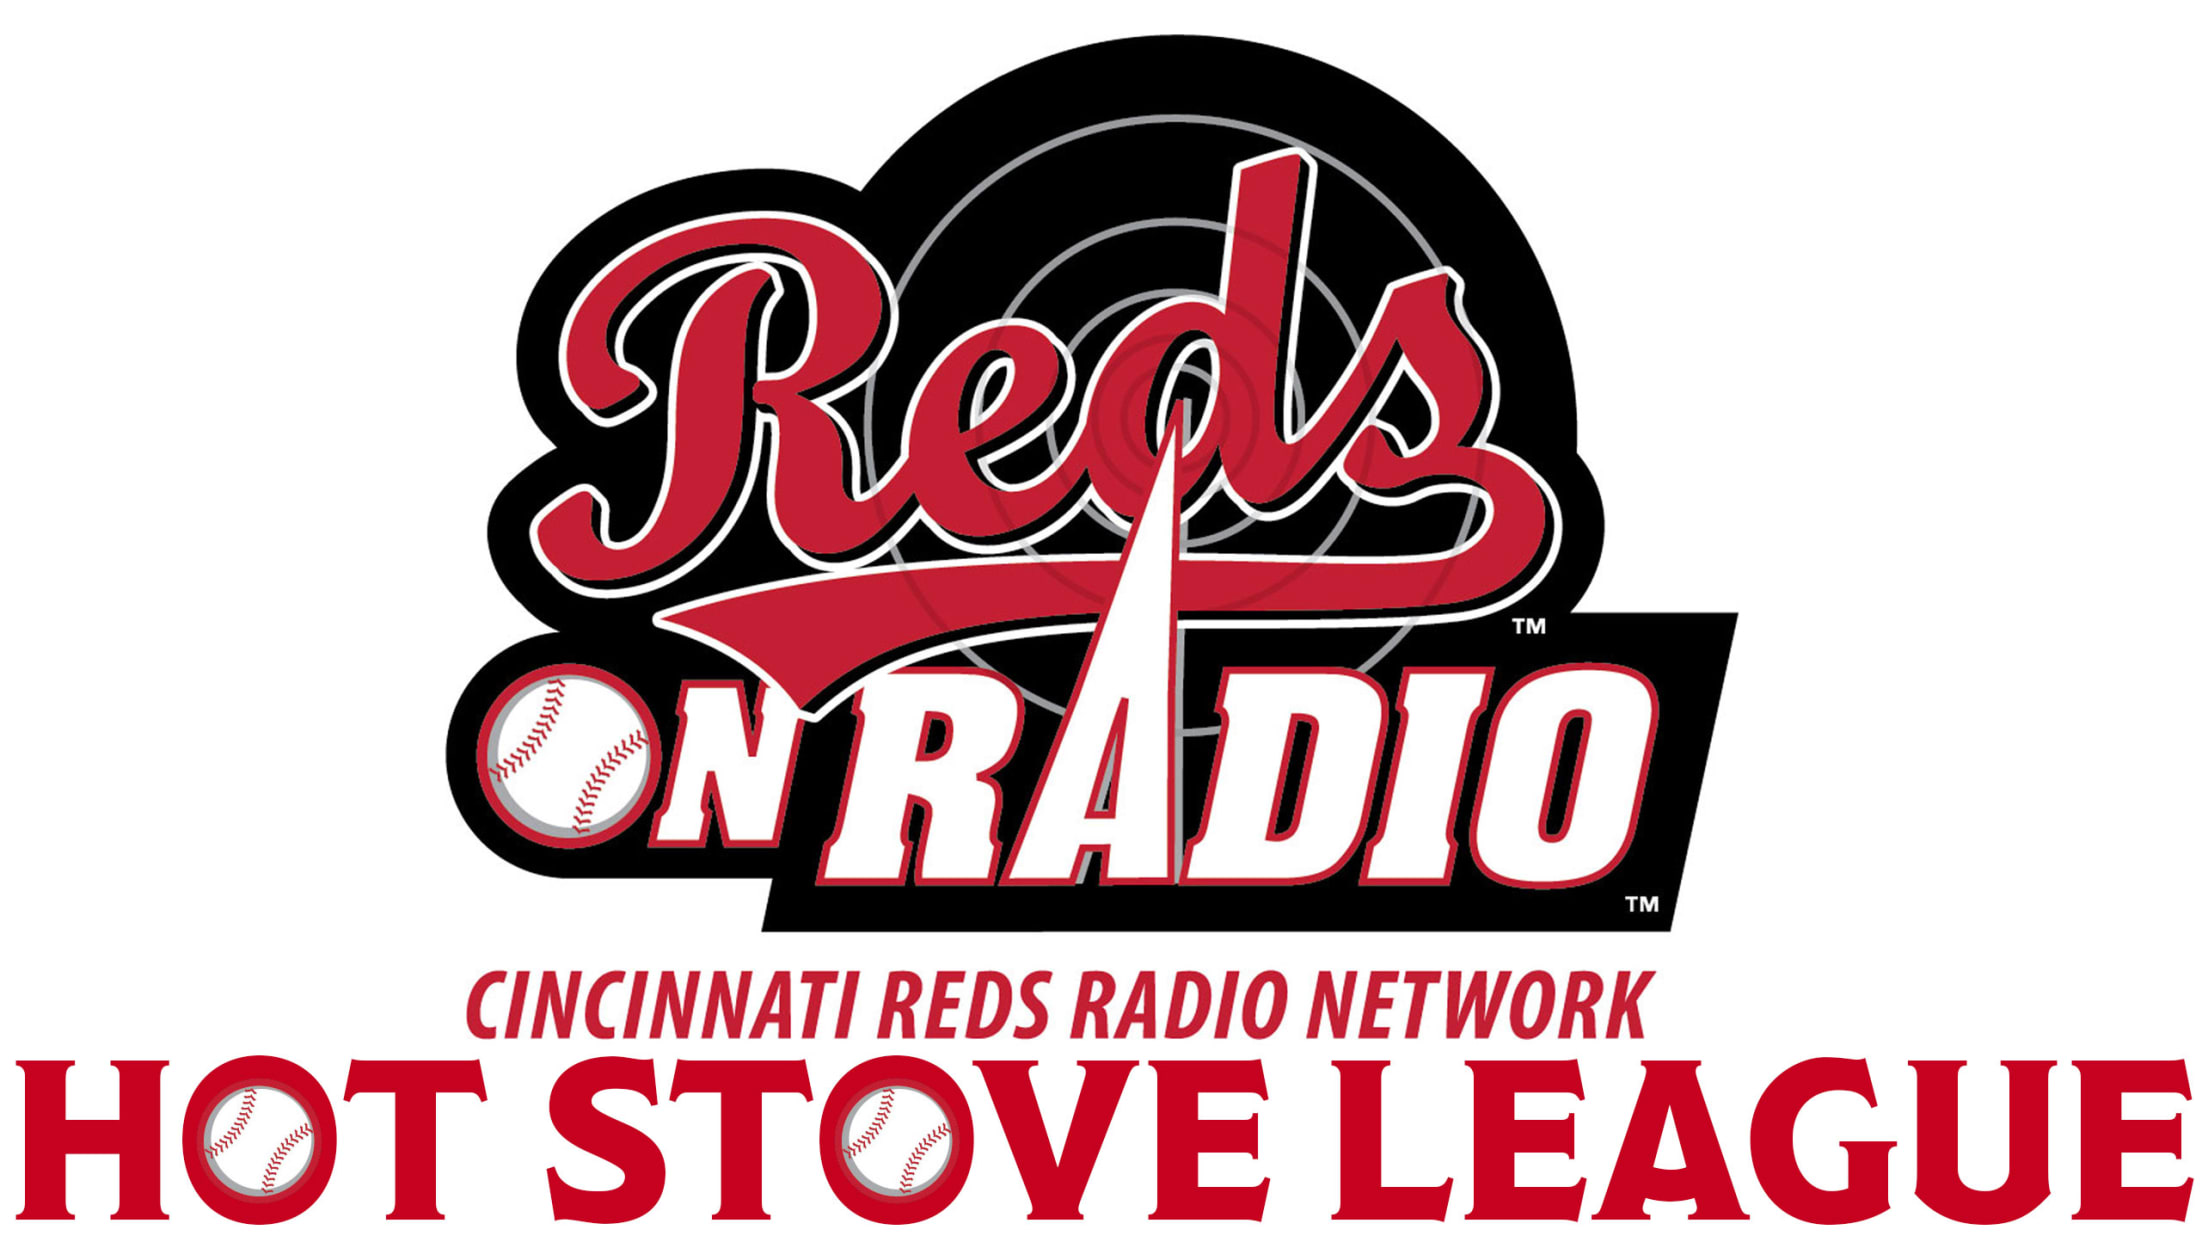 Cincinnati Reds - ⚠️ PROGRAMMING ALERT ⚠️ The Reds will